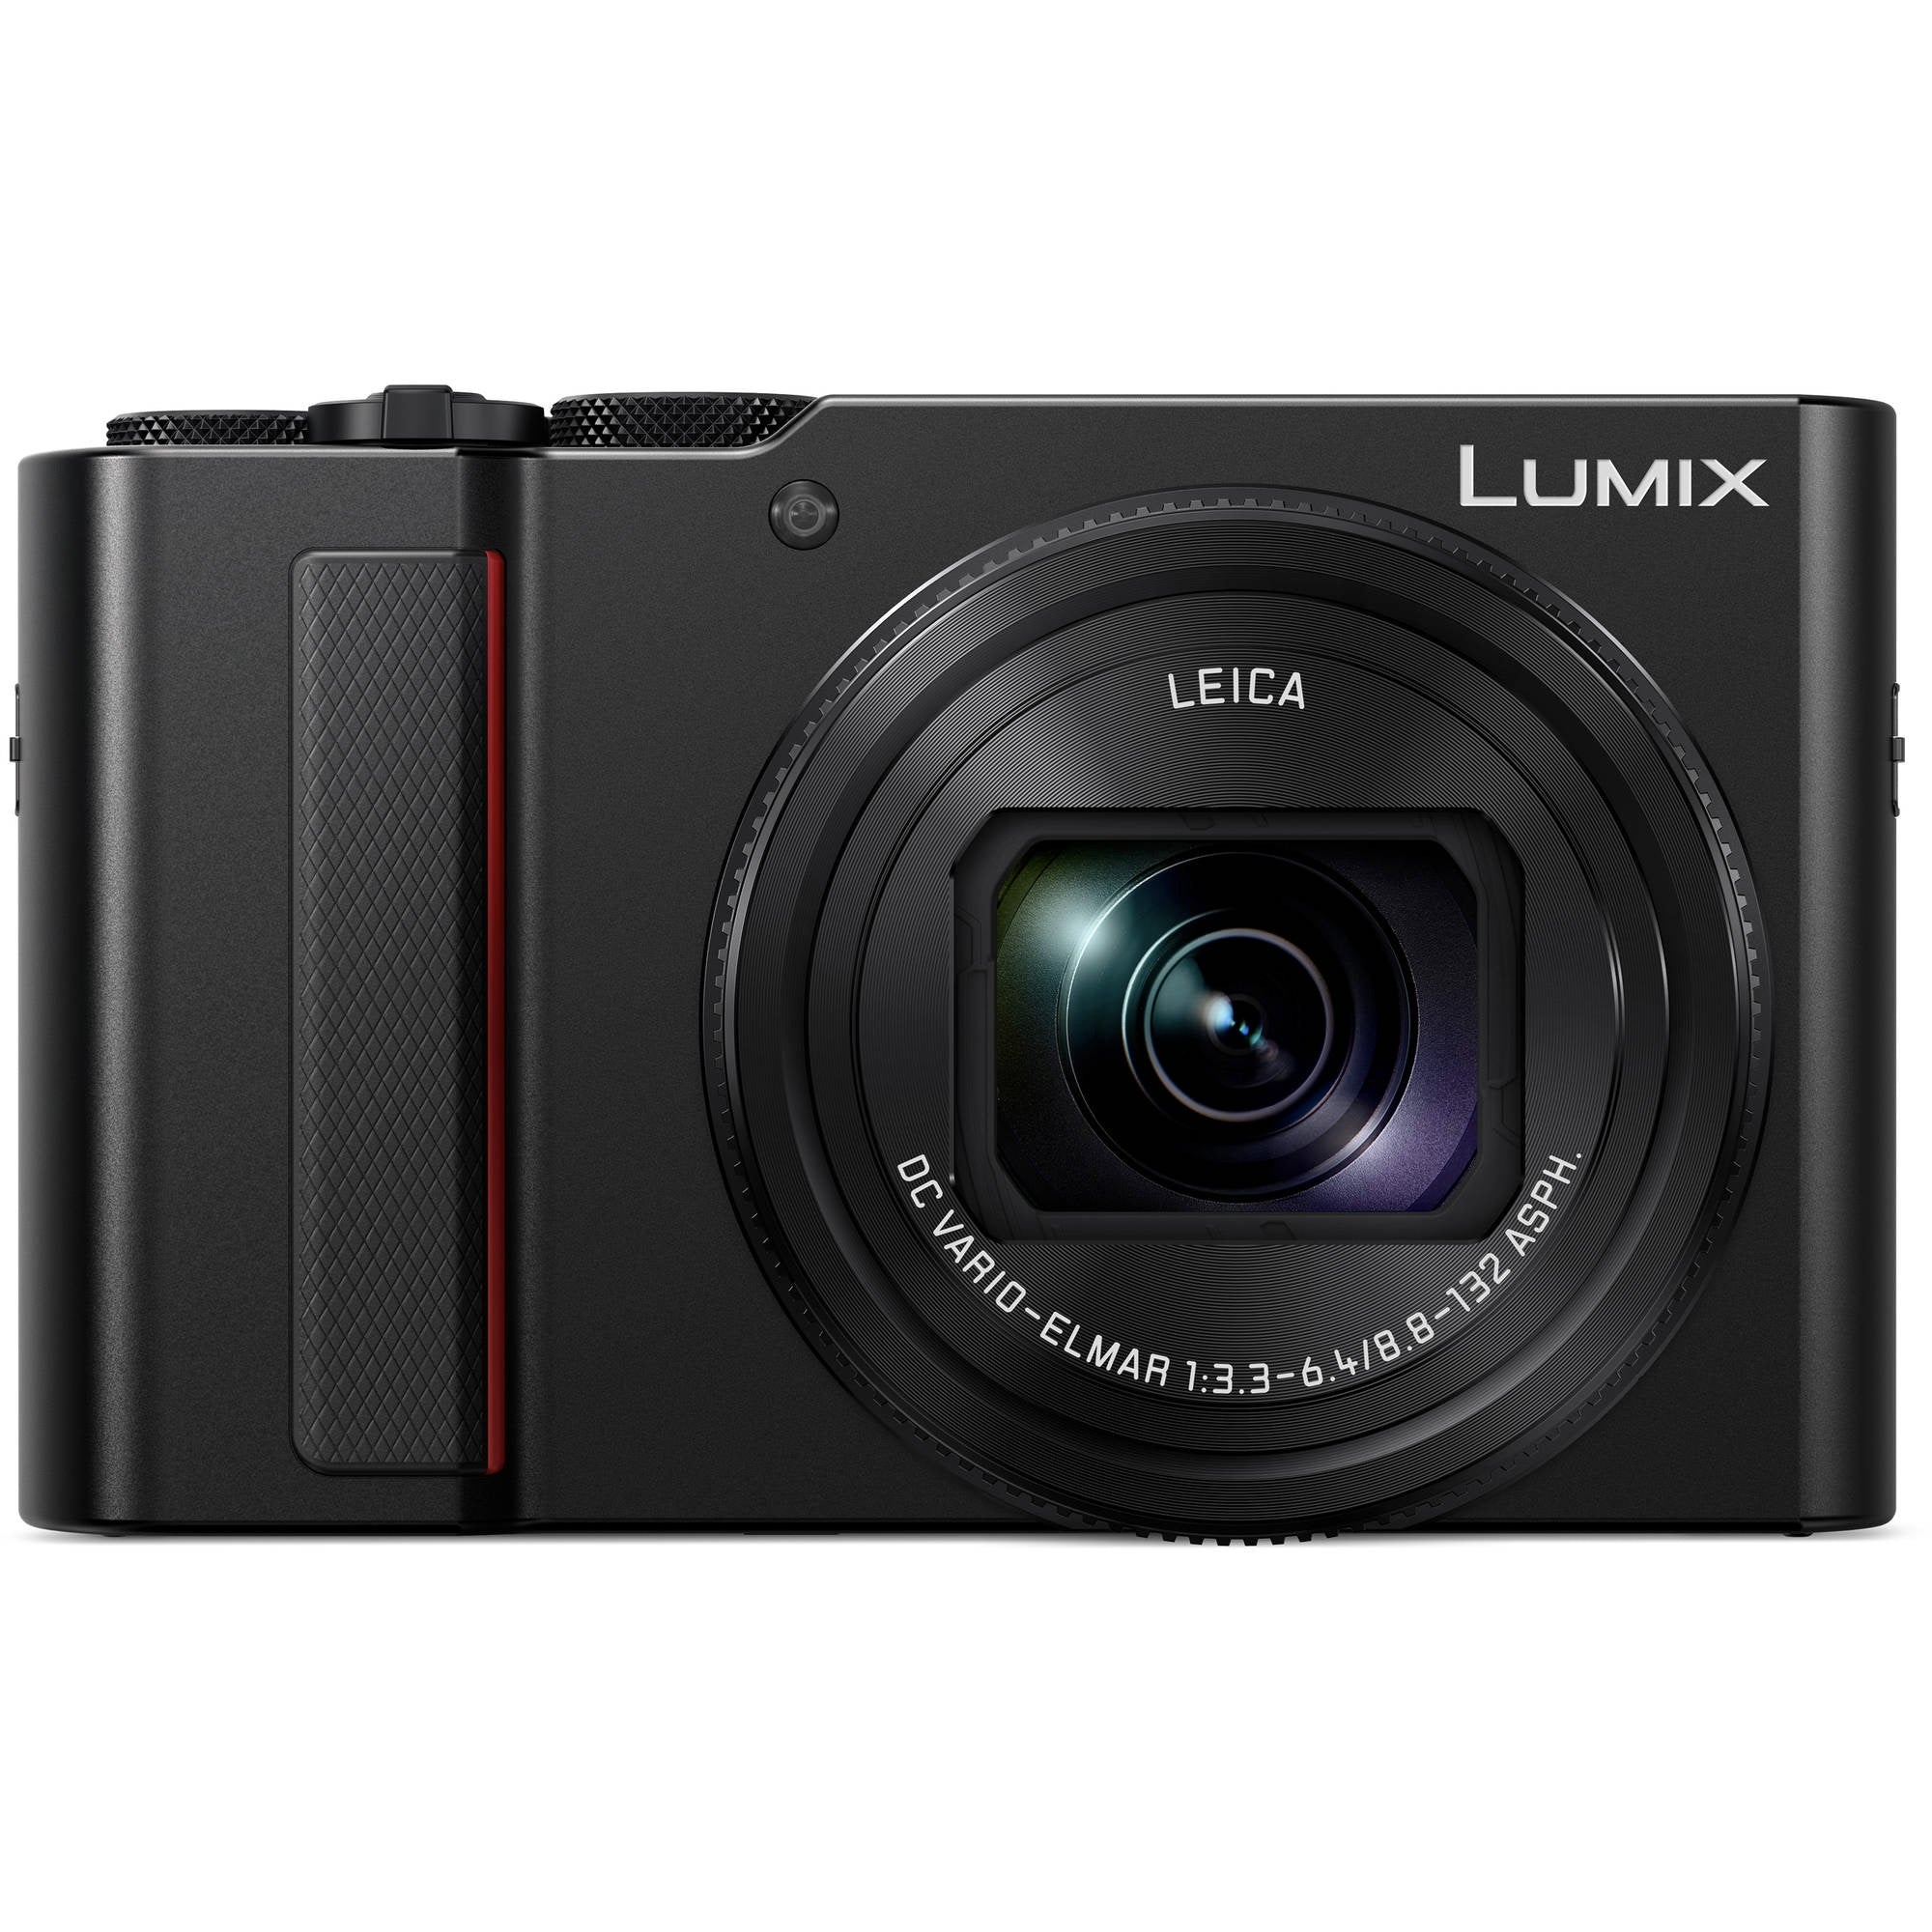 Product Image of Panasonic Lumix DC-TZ200D Digital Compact Camera